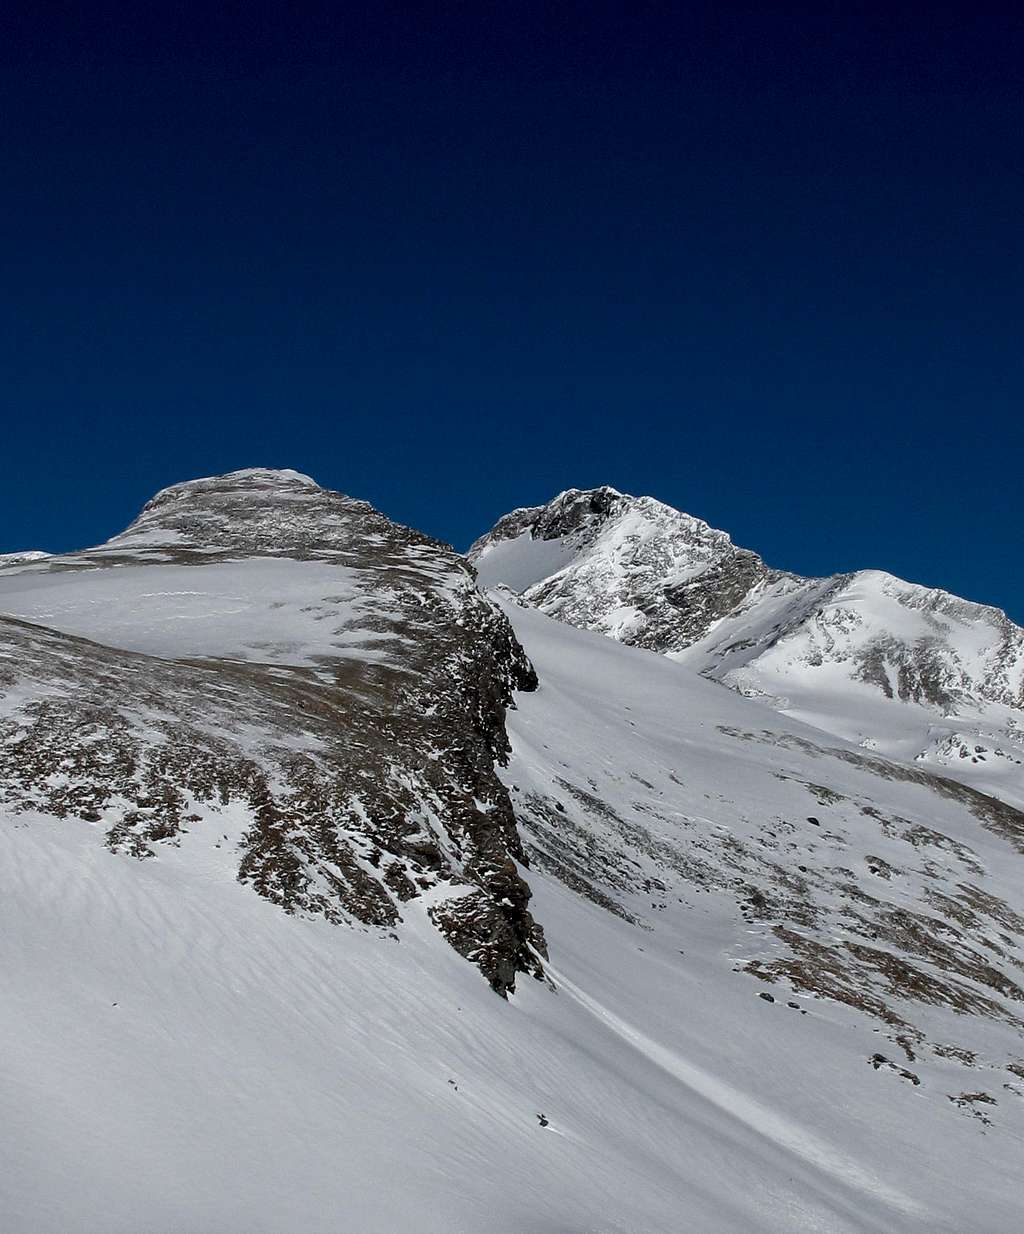 Grauleitenspitze (2893m) and Ankogel (3246m)